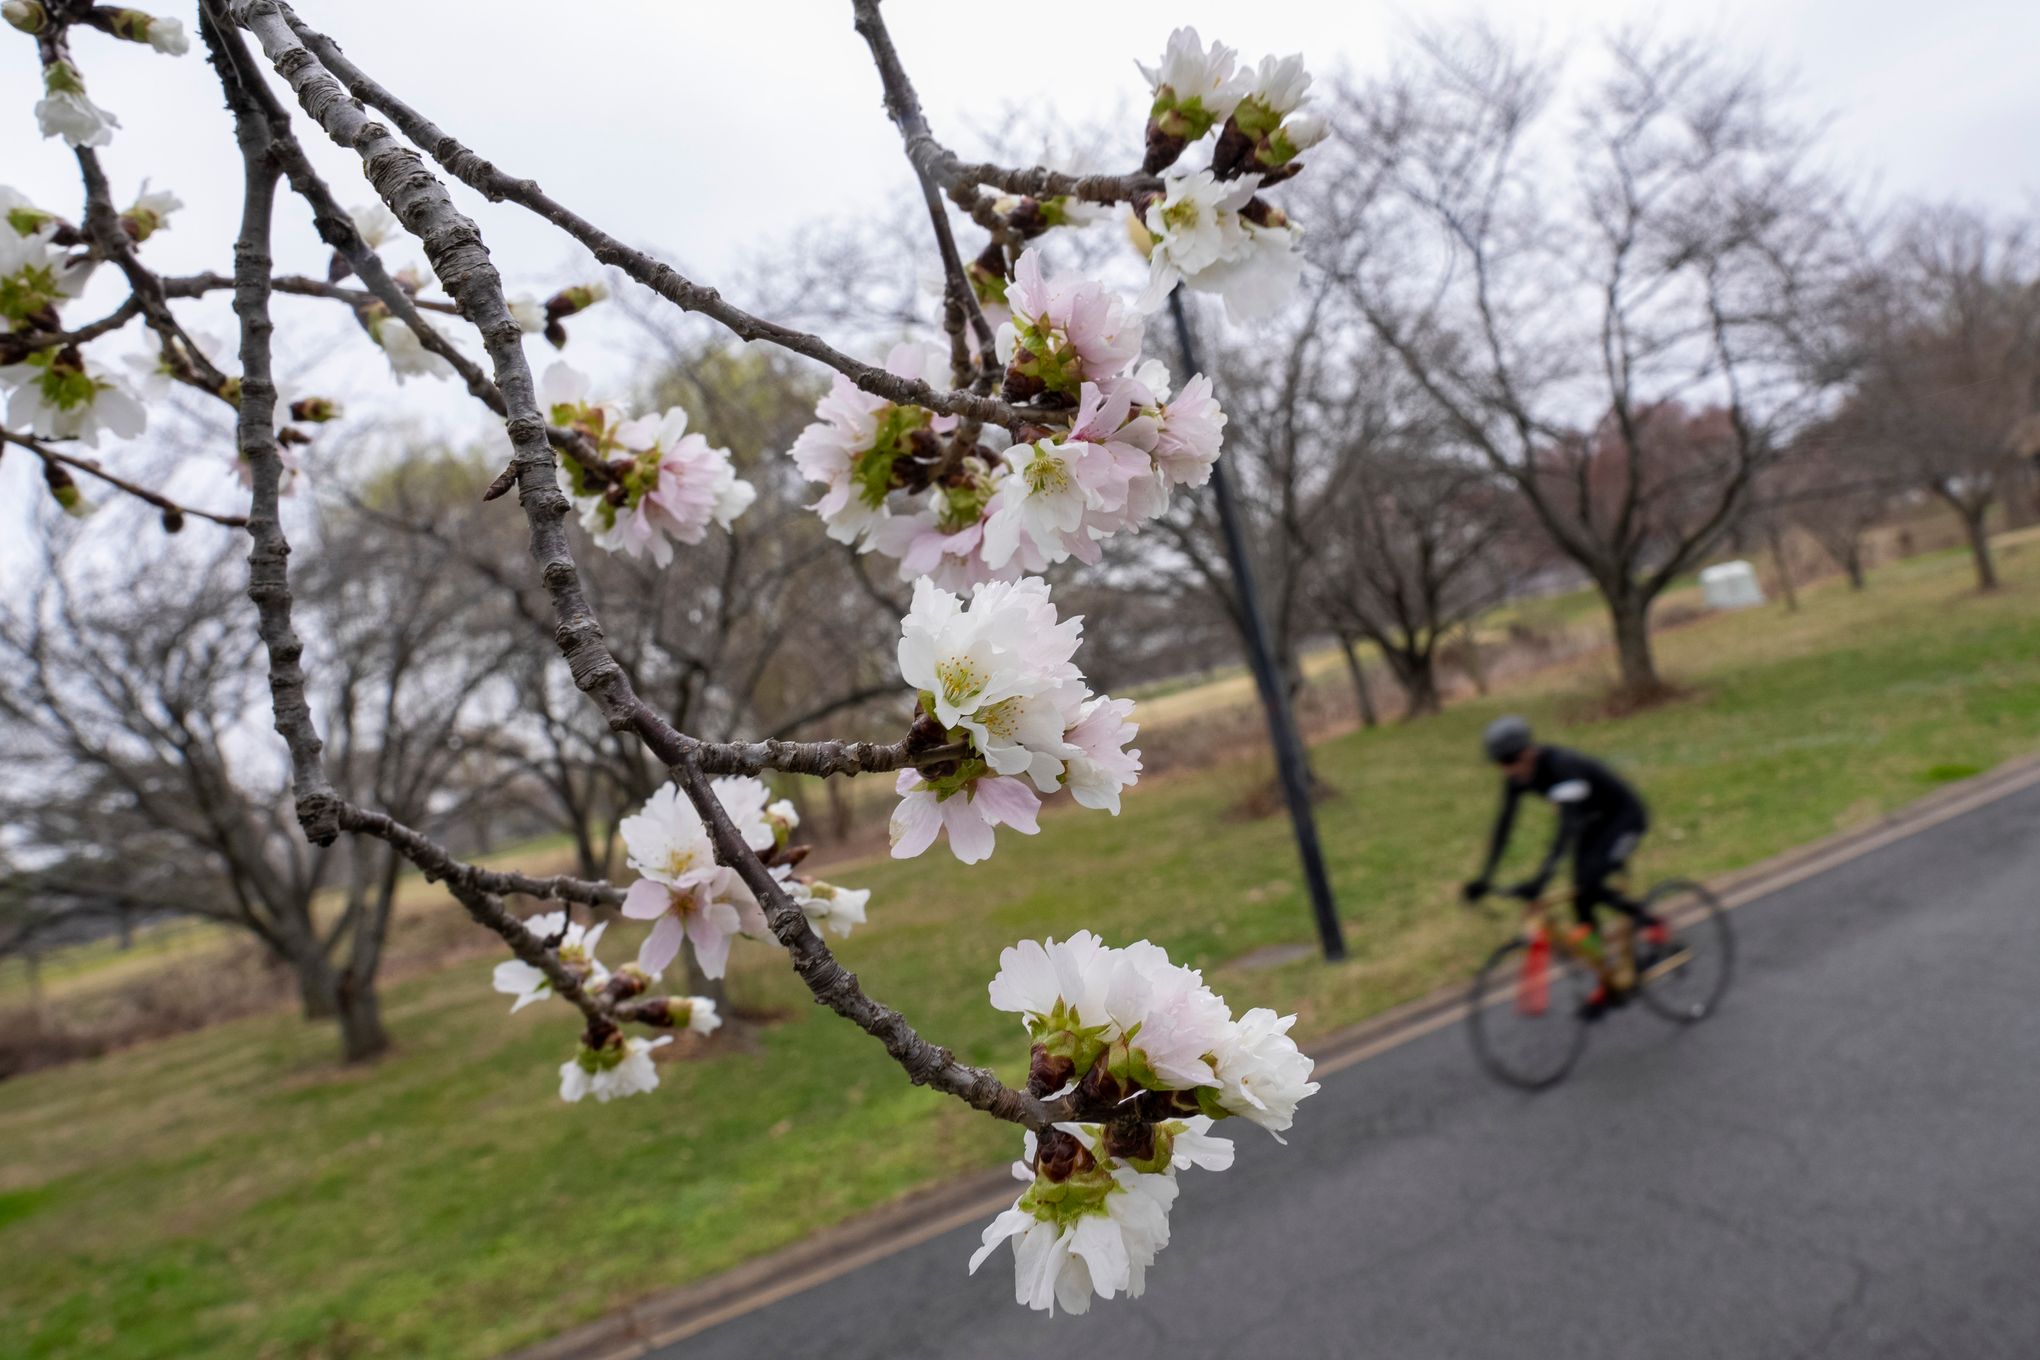 Sports & Recreation Archives - National Cherry Blossom Festival